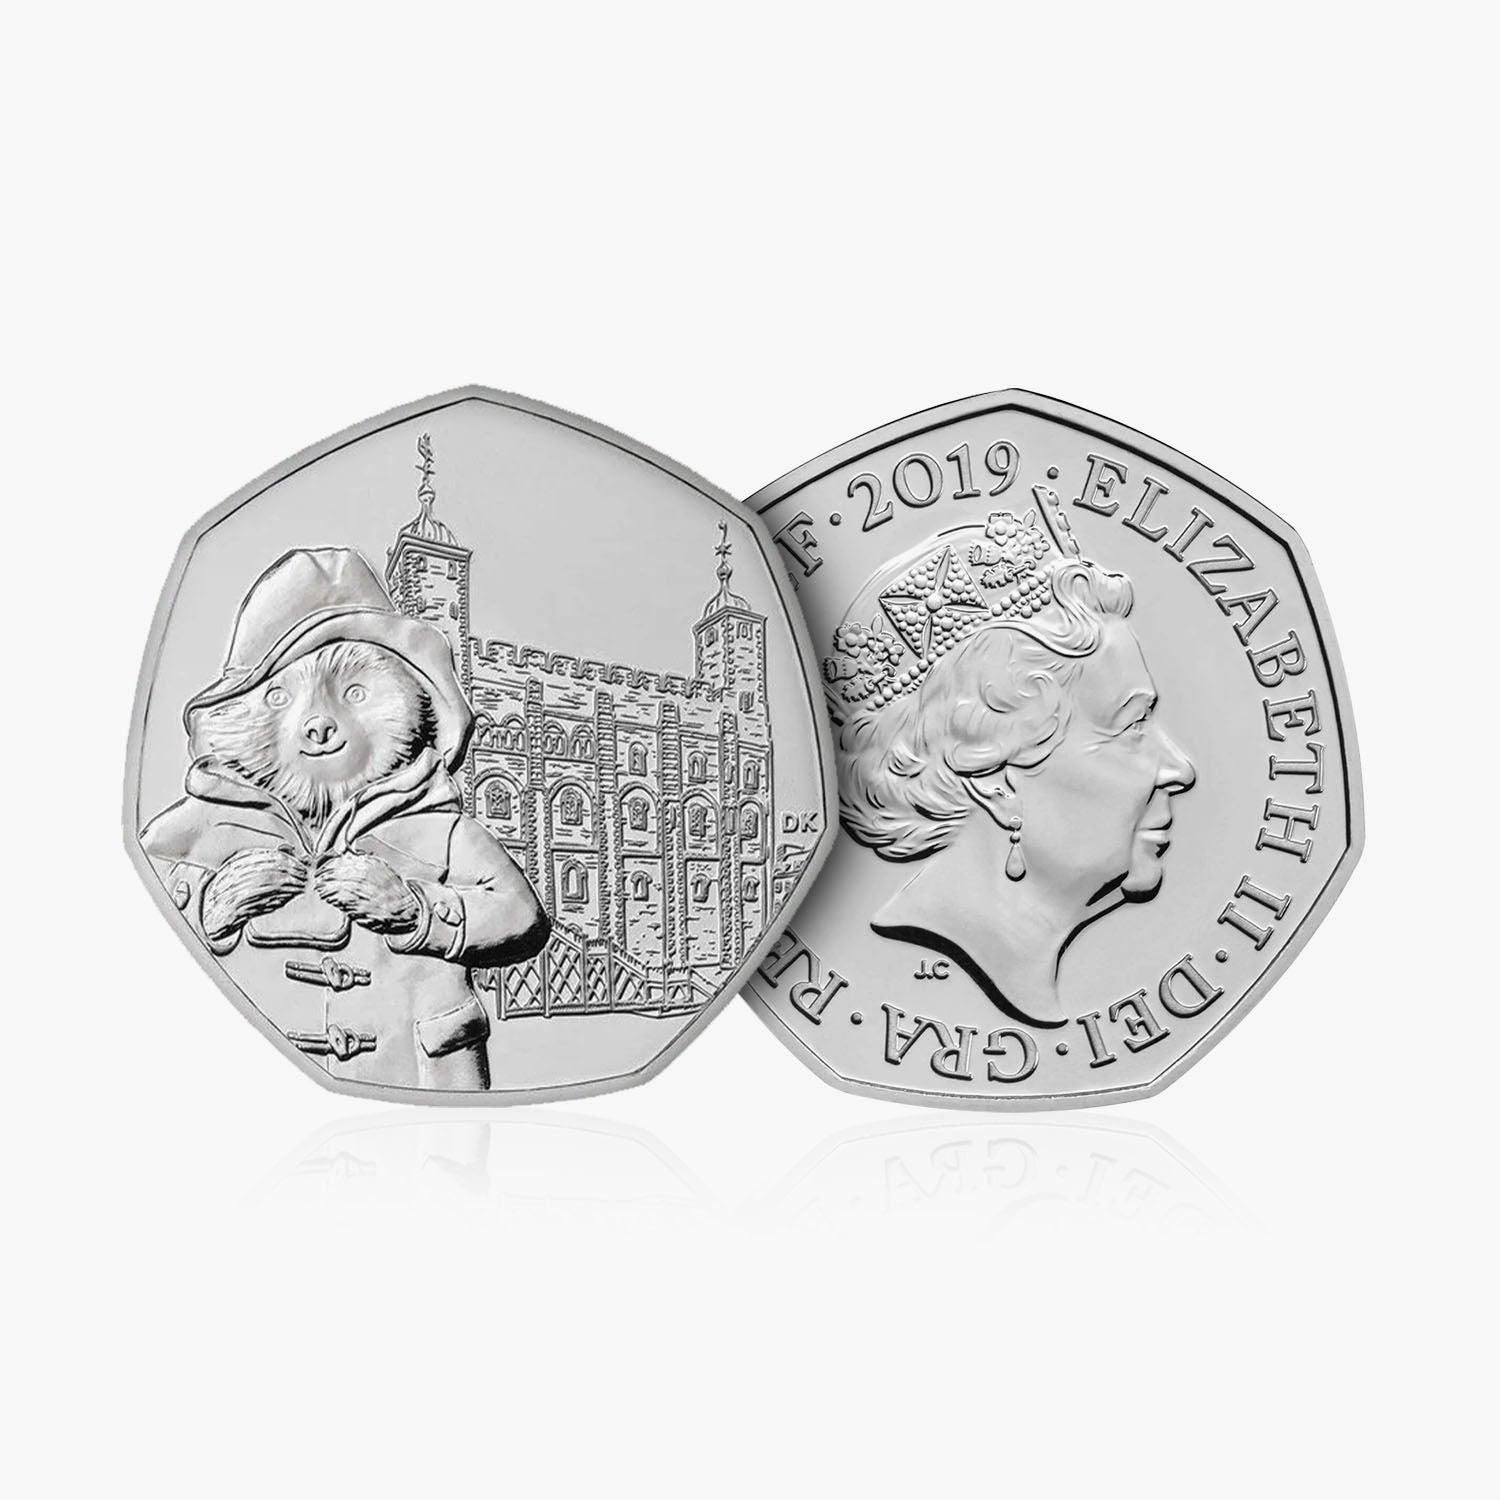 2019 Circulated Paddington Bear series - Paddington at the Tower 50p coin